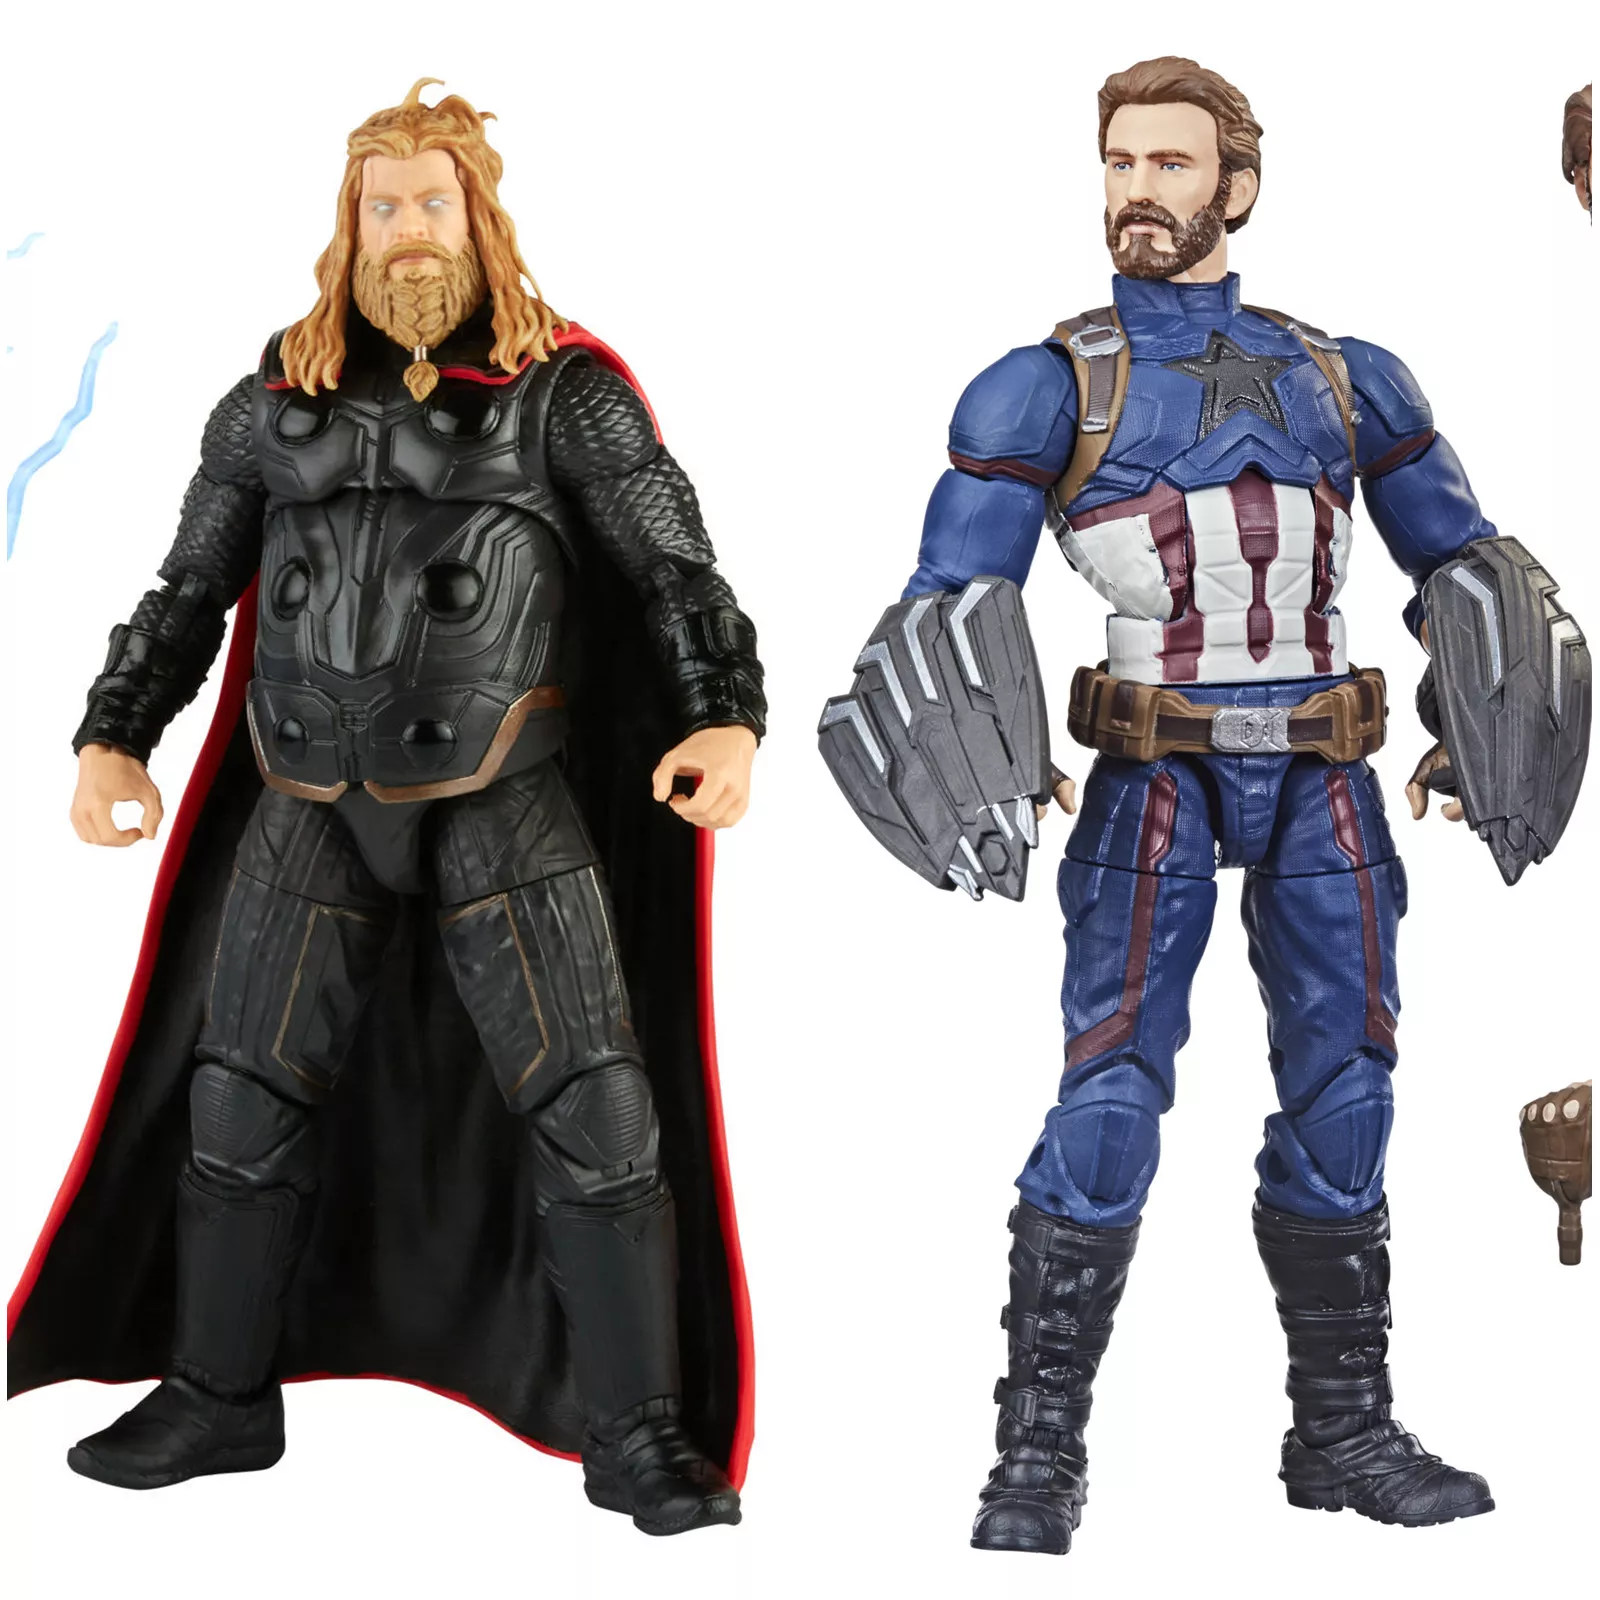 Marvel Legends The Infinity SAGA Infinity War Captain America Avengers Endgame Fat Thor 6" Action Figure Toys Doll Model Loose